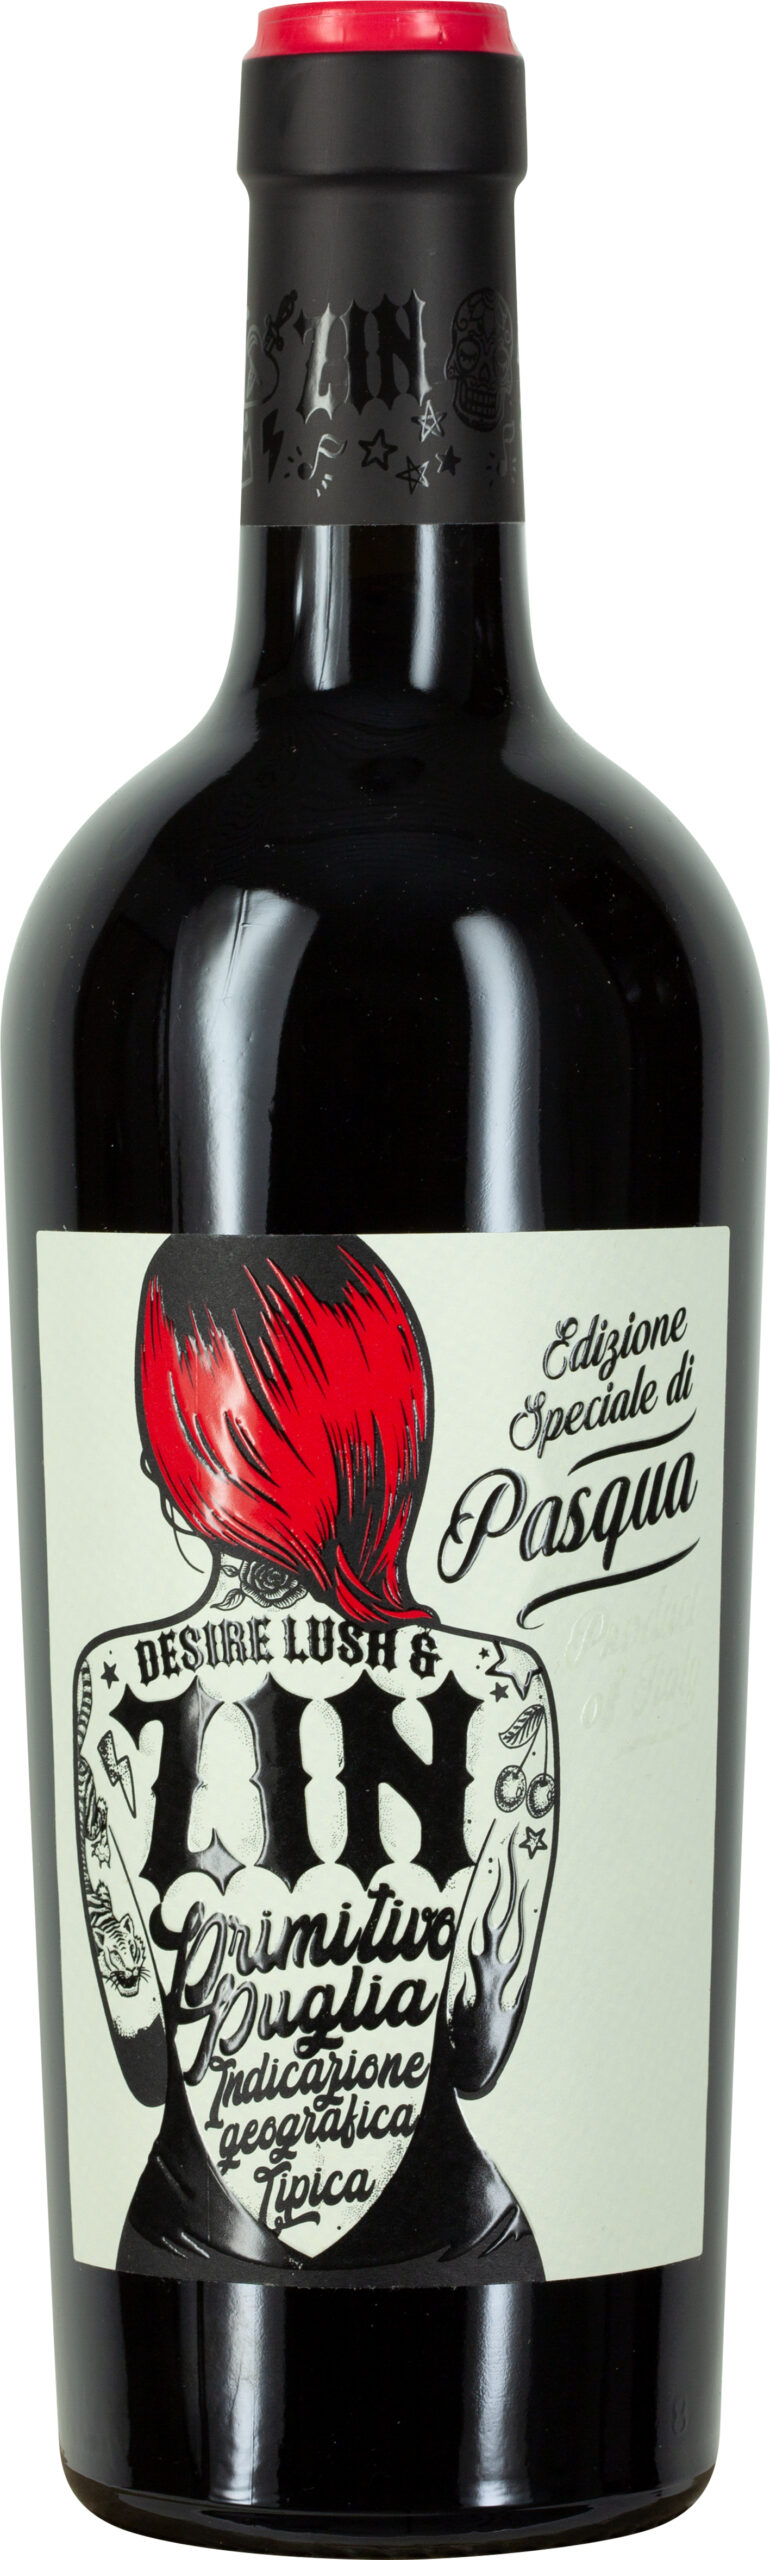 Pasqua Desire Lush & Zin Primitivo Puglia IGT